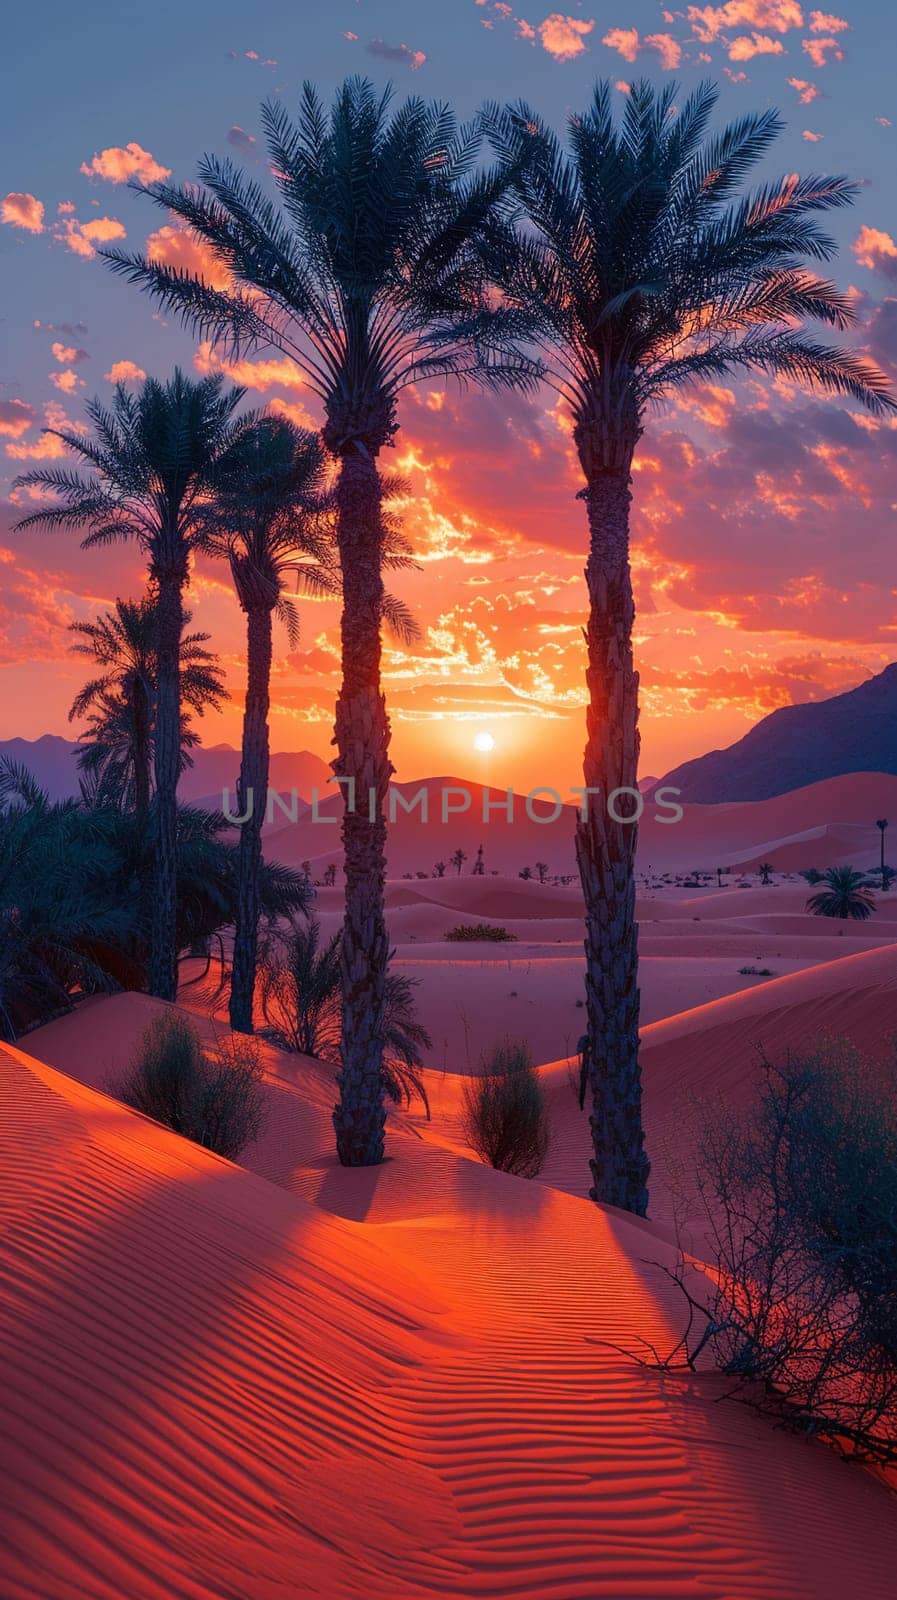 Soft sand dunes at sunrise, providing a serene and natural backdrop.